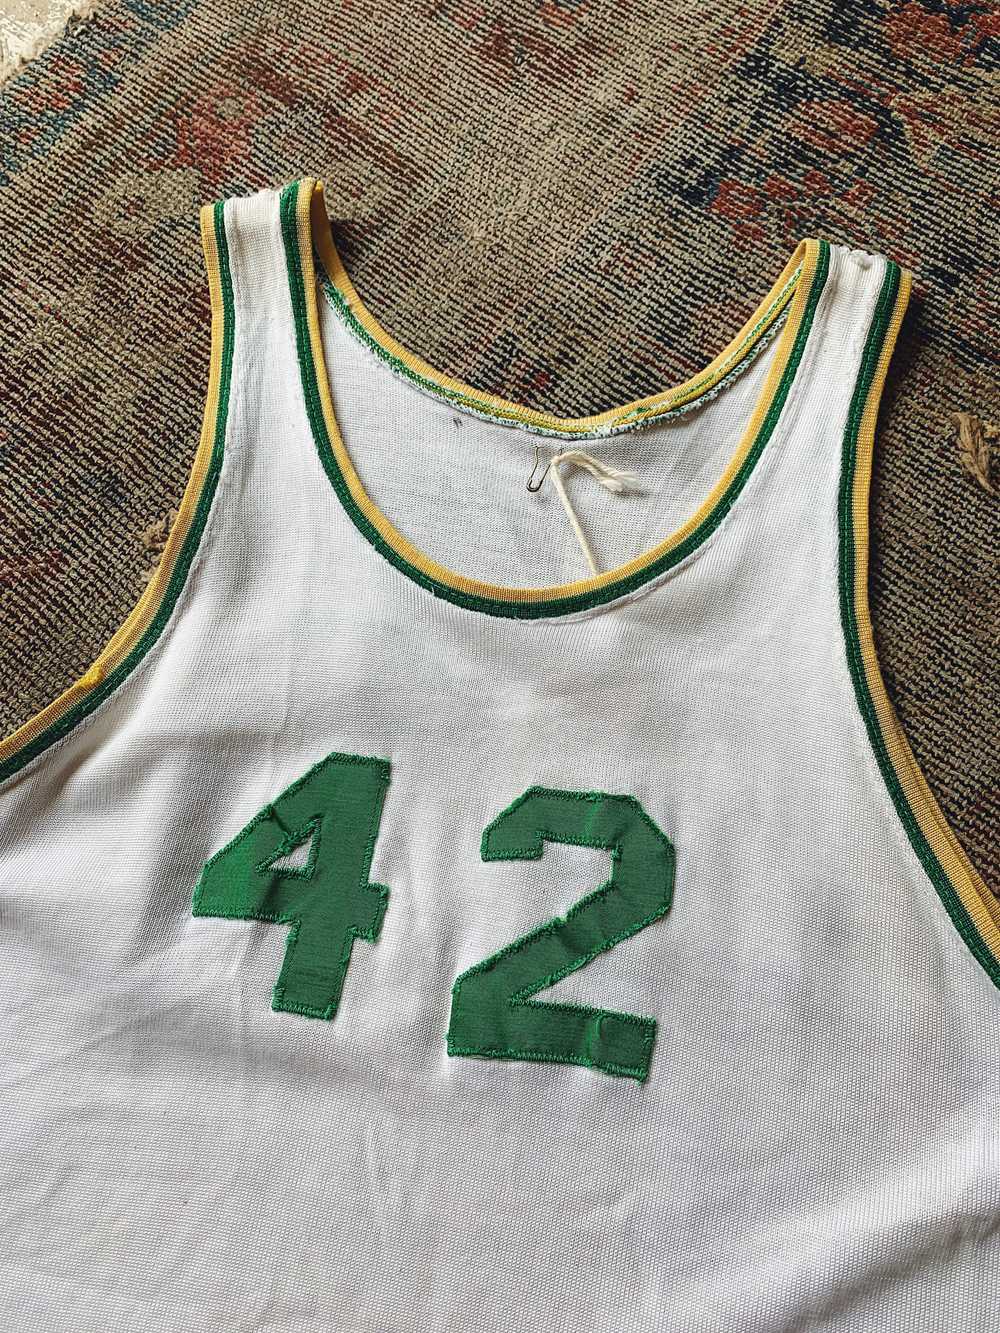 Vintage Rawling’s Brand “42” Basketball Jersey - image 2